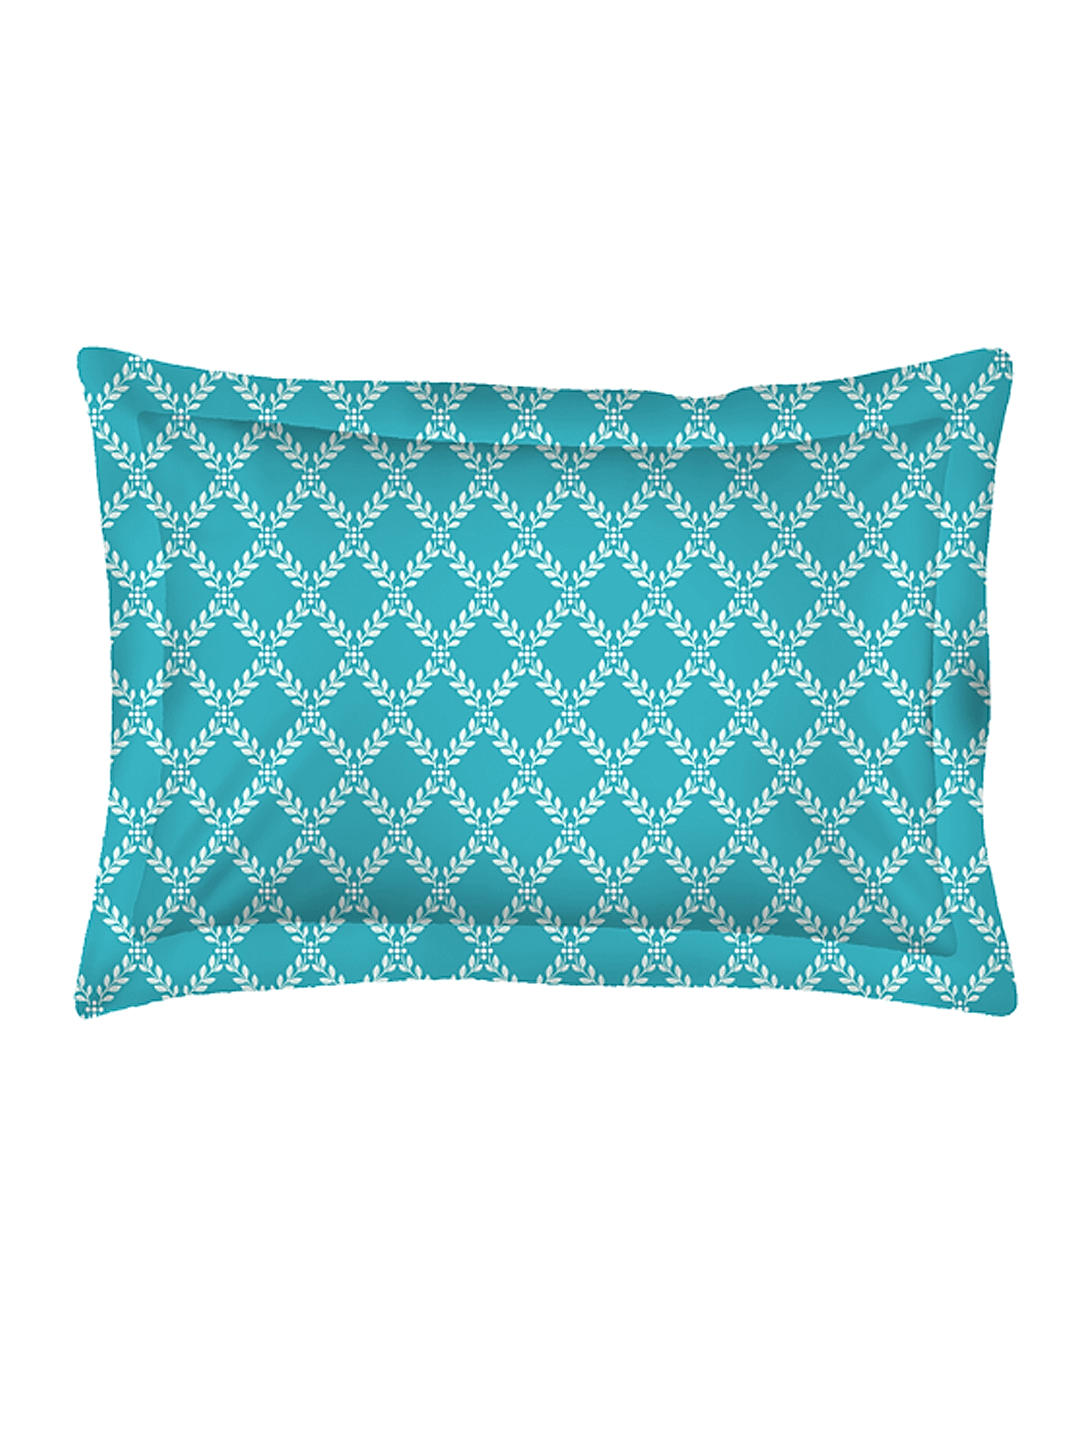 Iris Gaze-1 100% cotton Fine Blue Colored Ethnic Print Single Bed Sheet Set